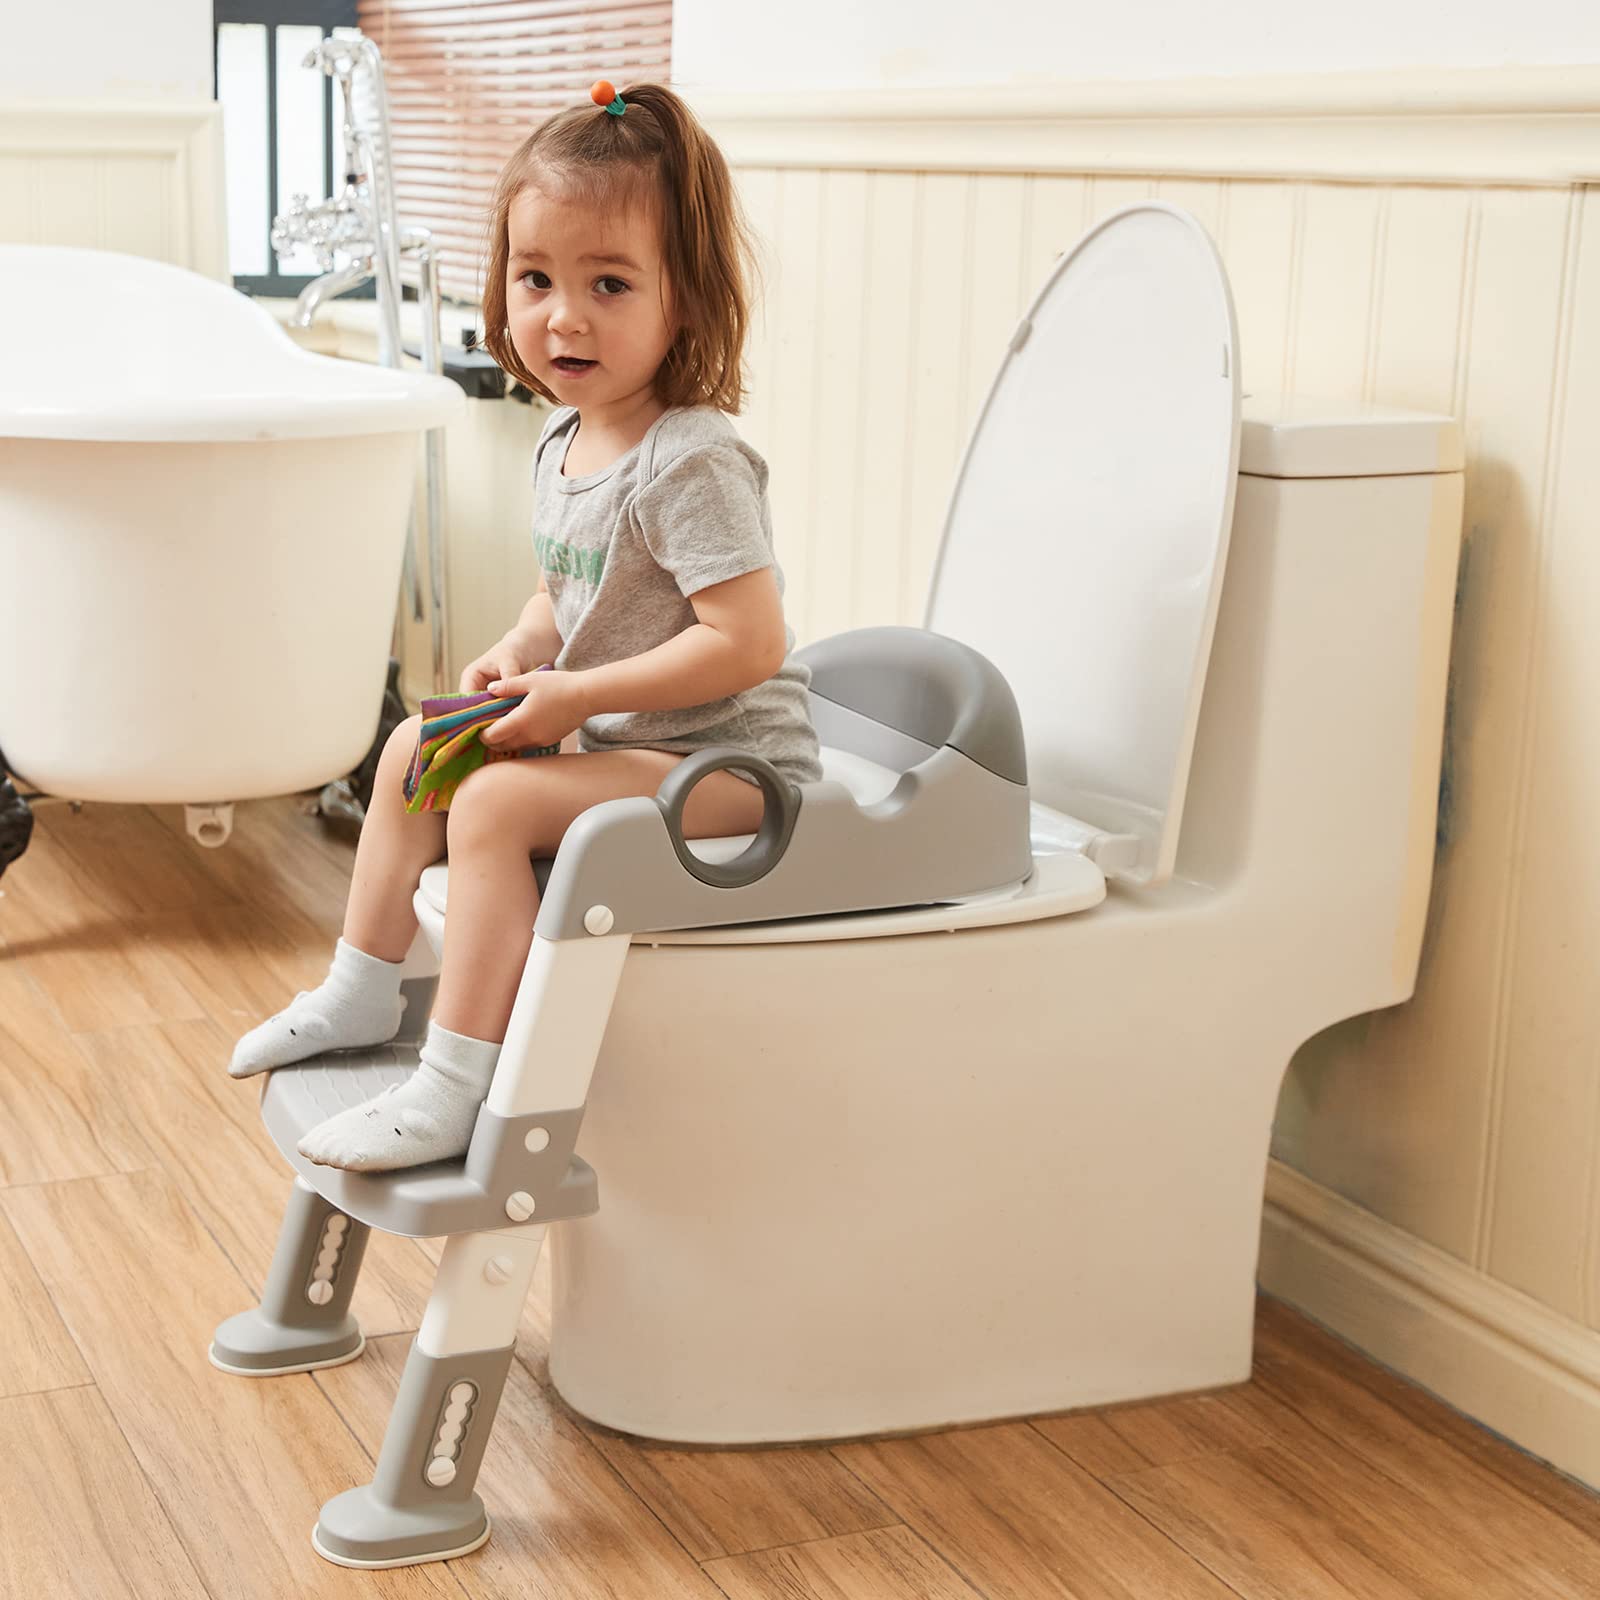 toilet training baby tips Baby toddler toilet training potty seat